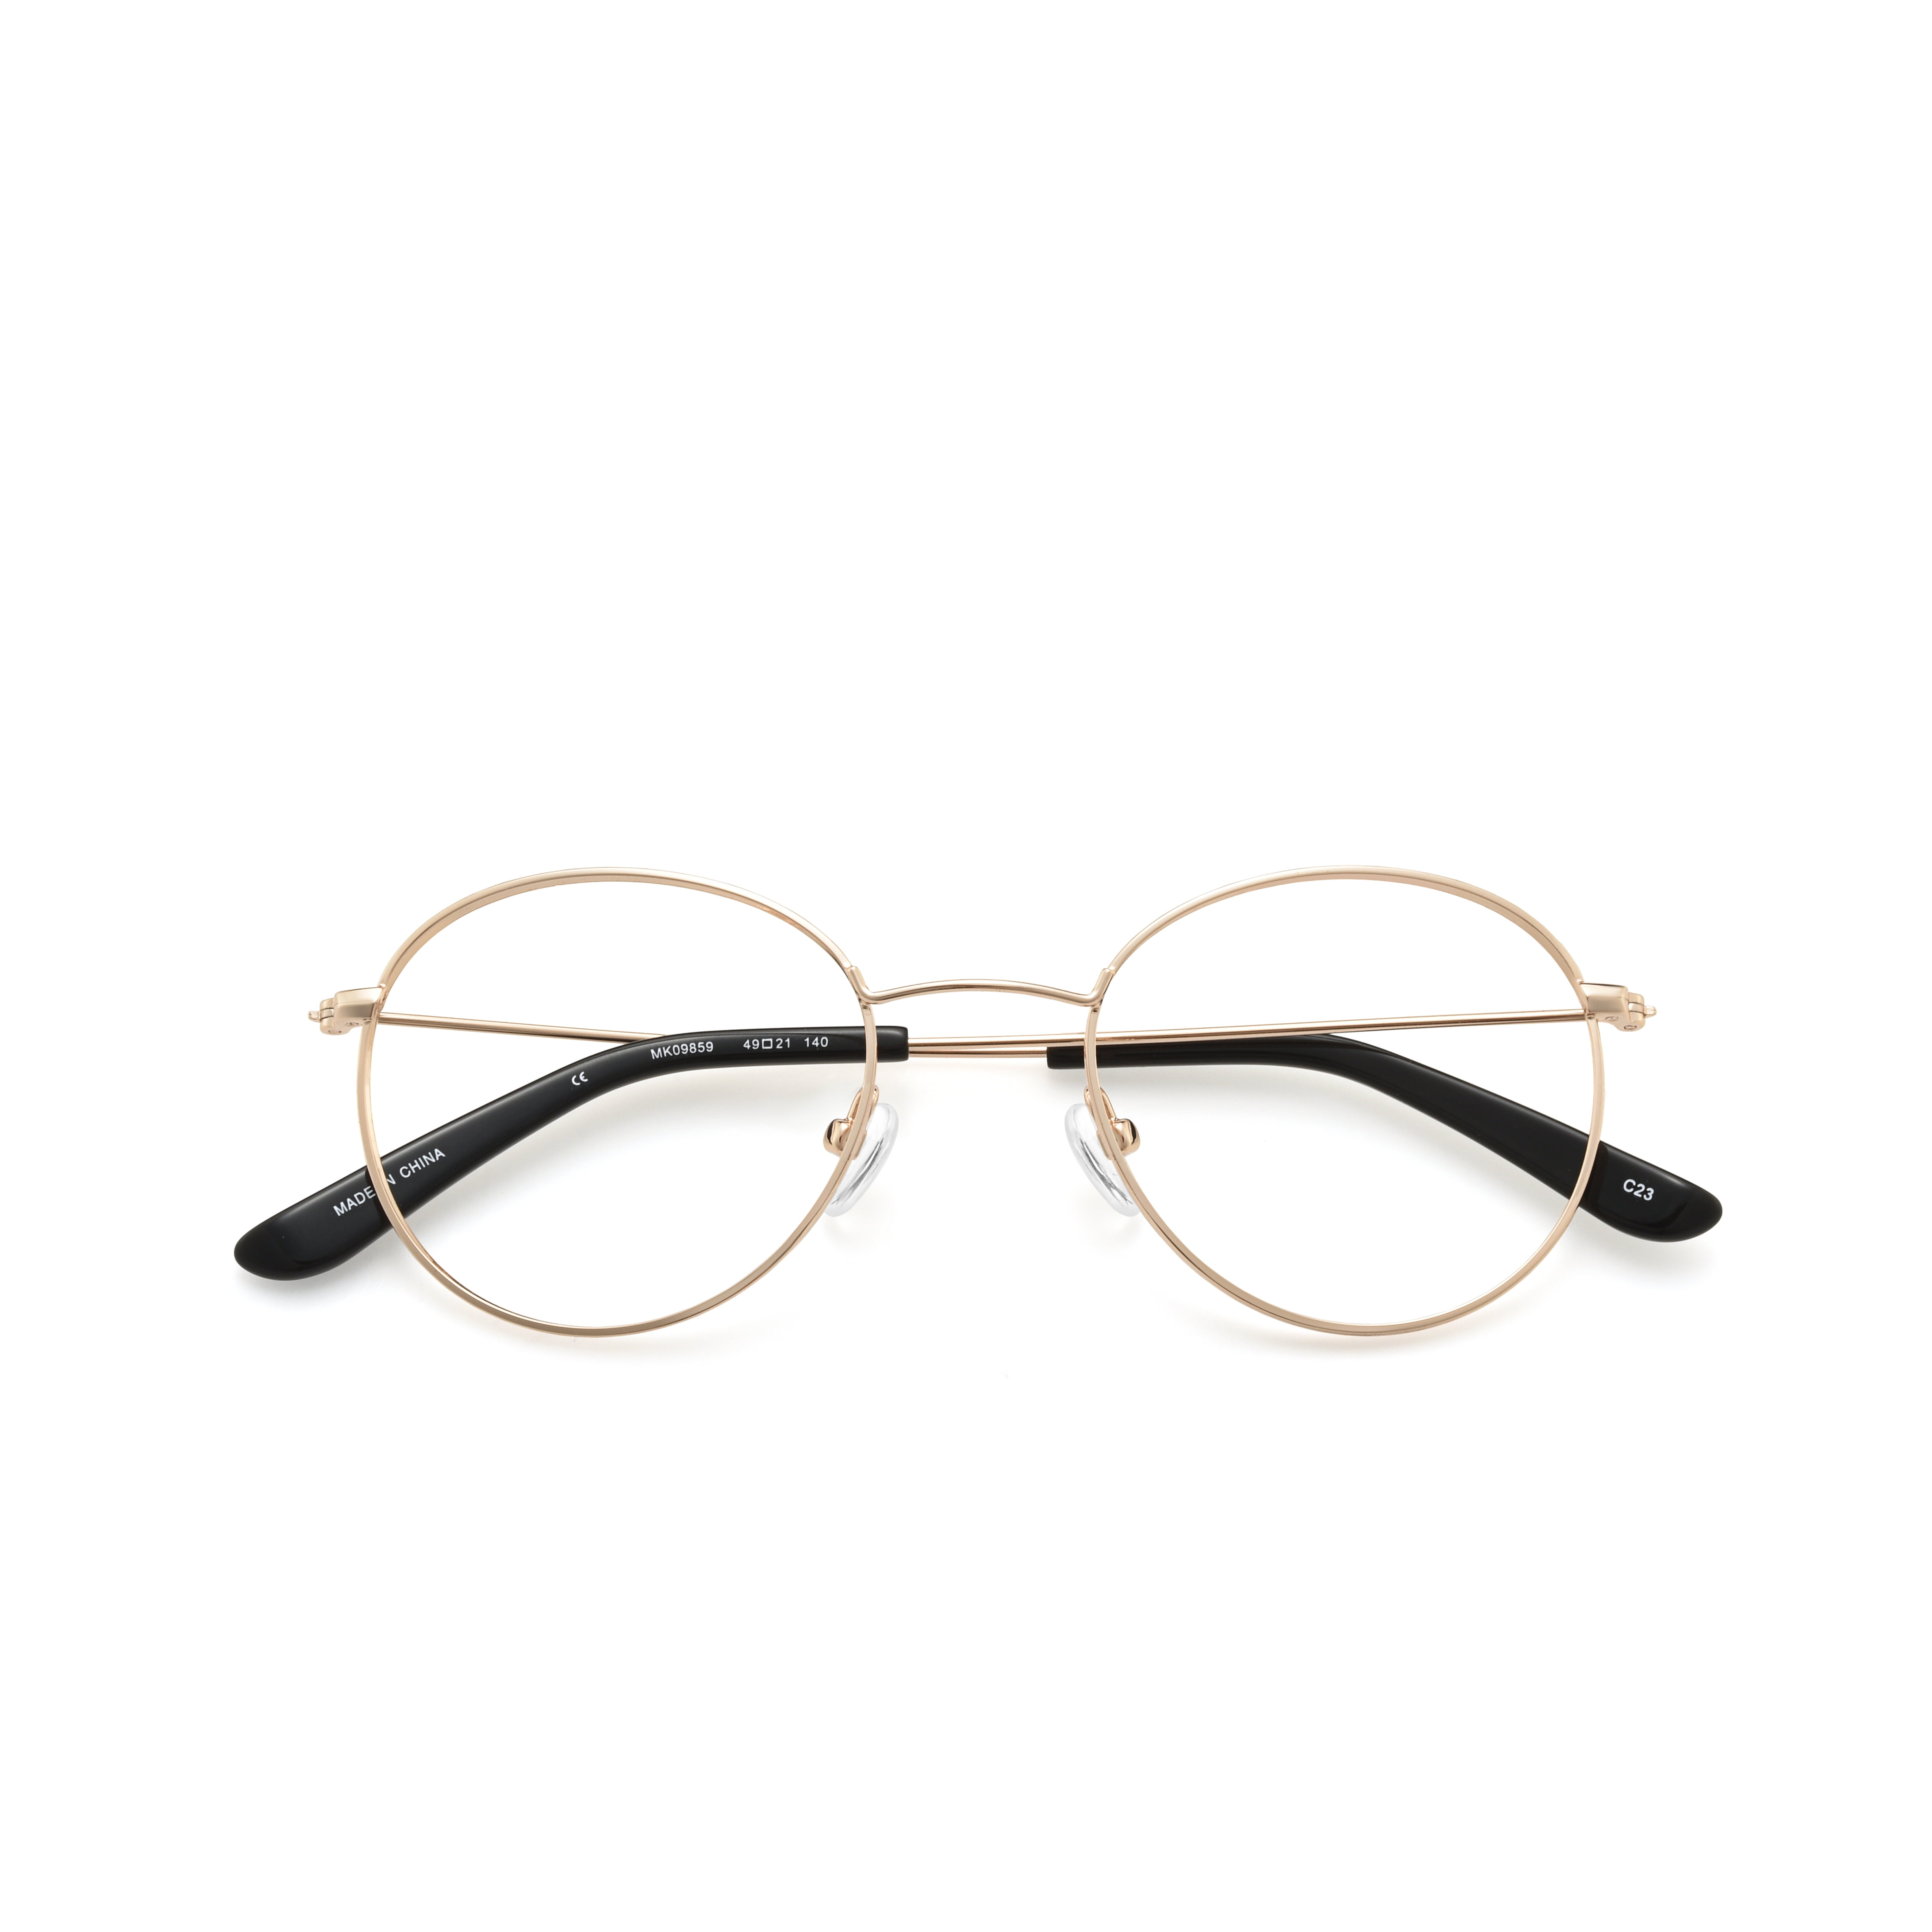 Walmart Women's Eyeglasses, MK09859, Gold, 49-21-140, with Case